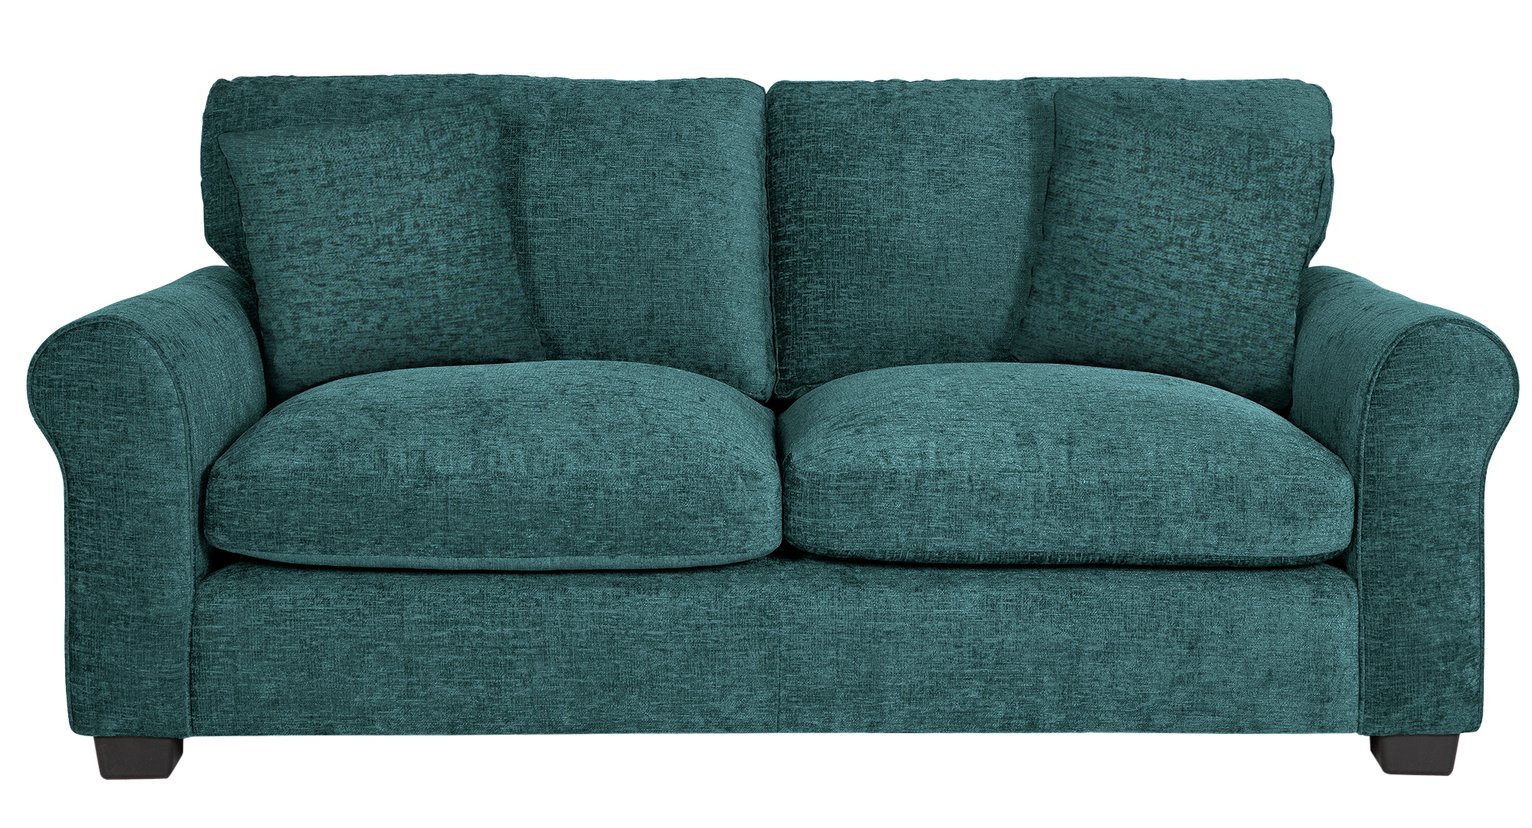 Argos Home Tammy 3 Seater Fabric Sofa - Teal